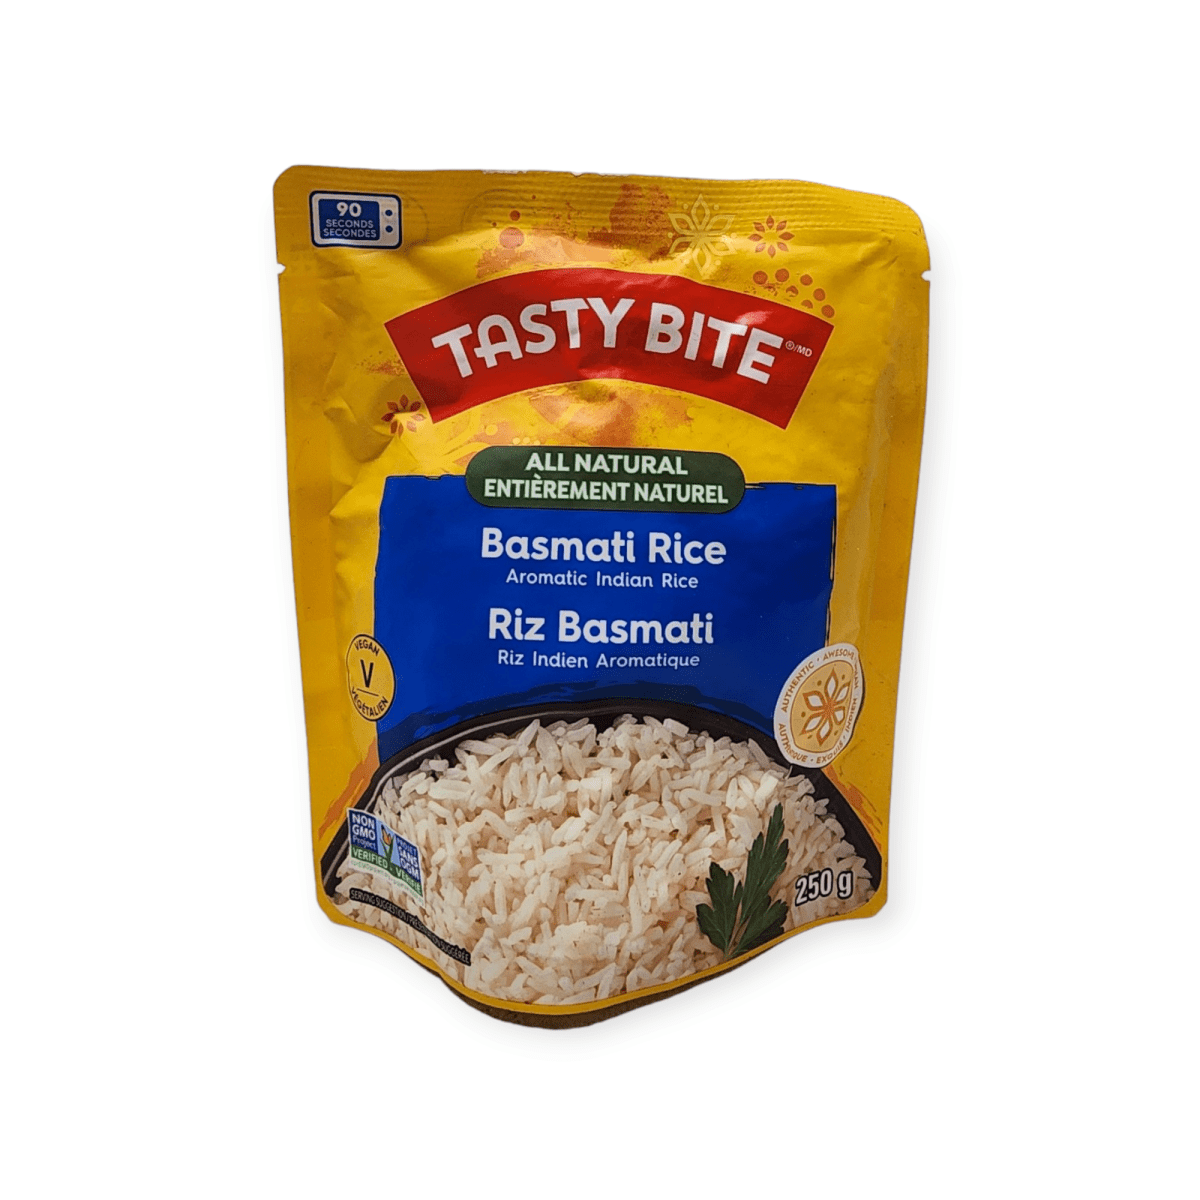 Tasty Bite Basmati Rice (250g)